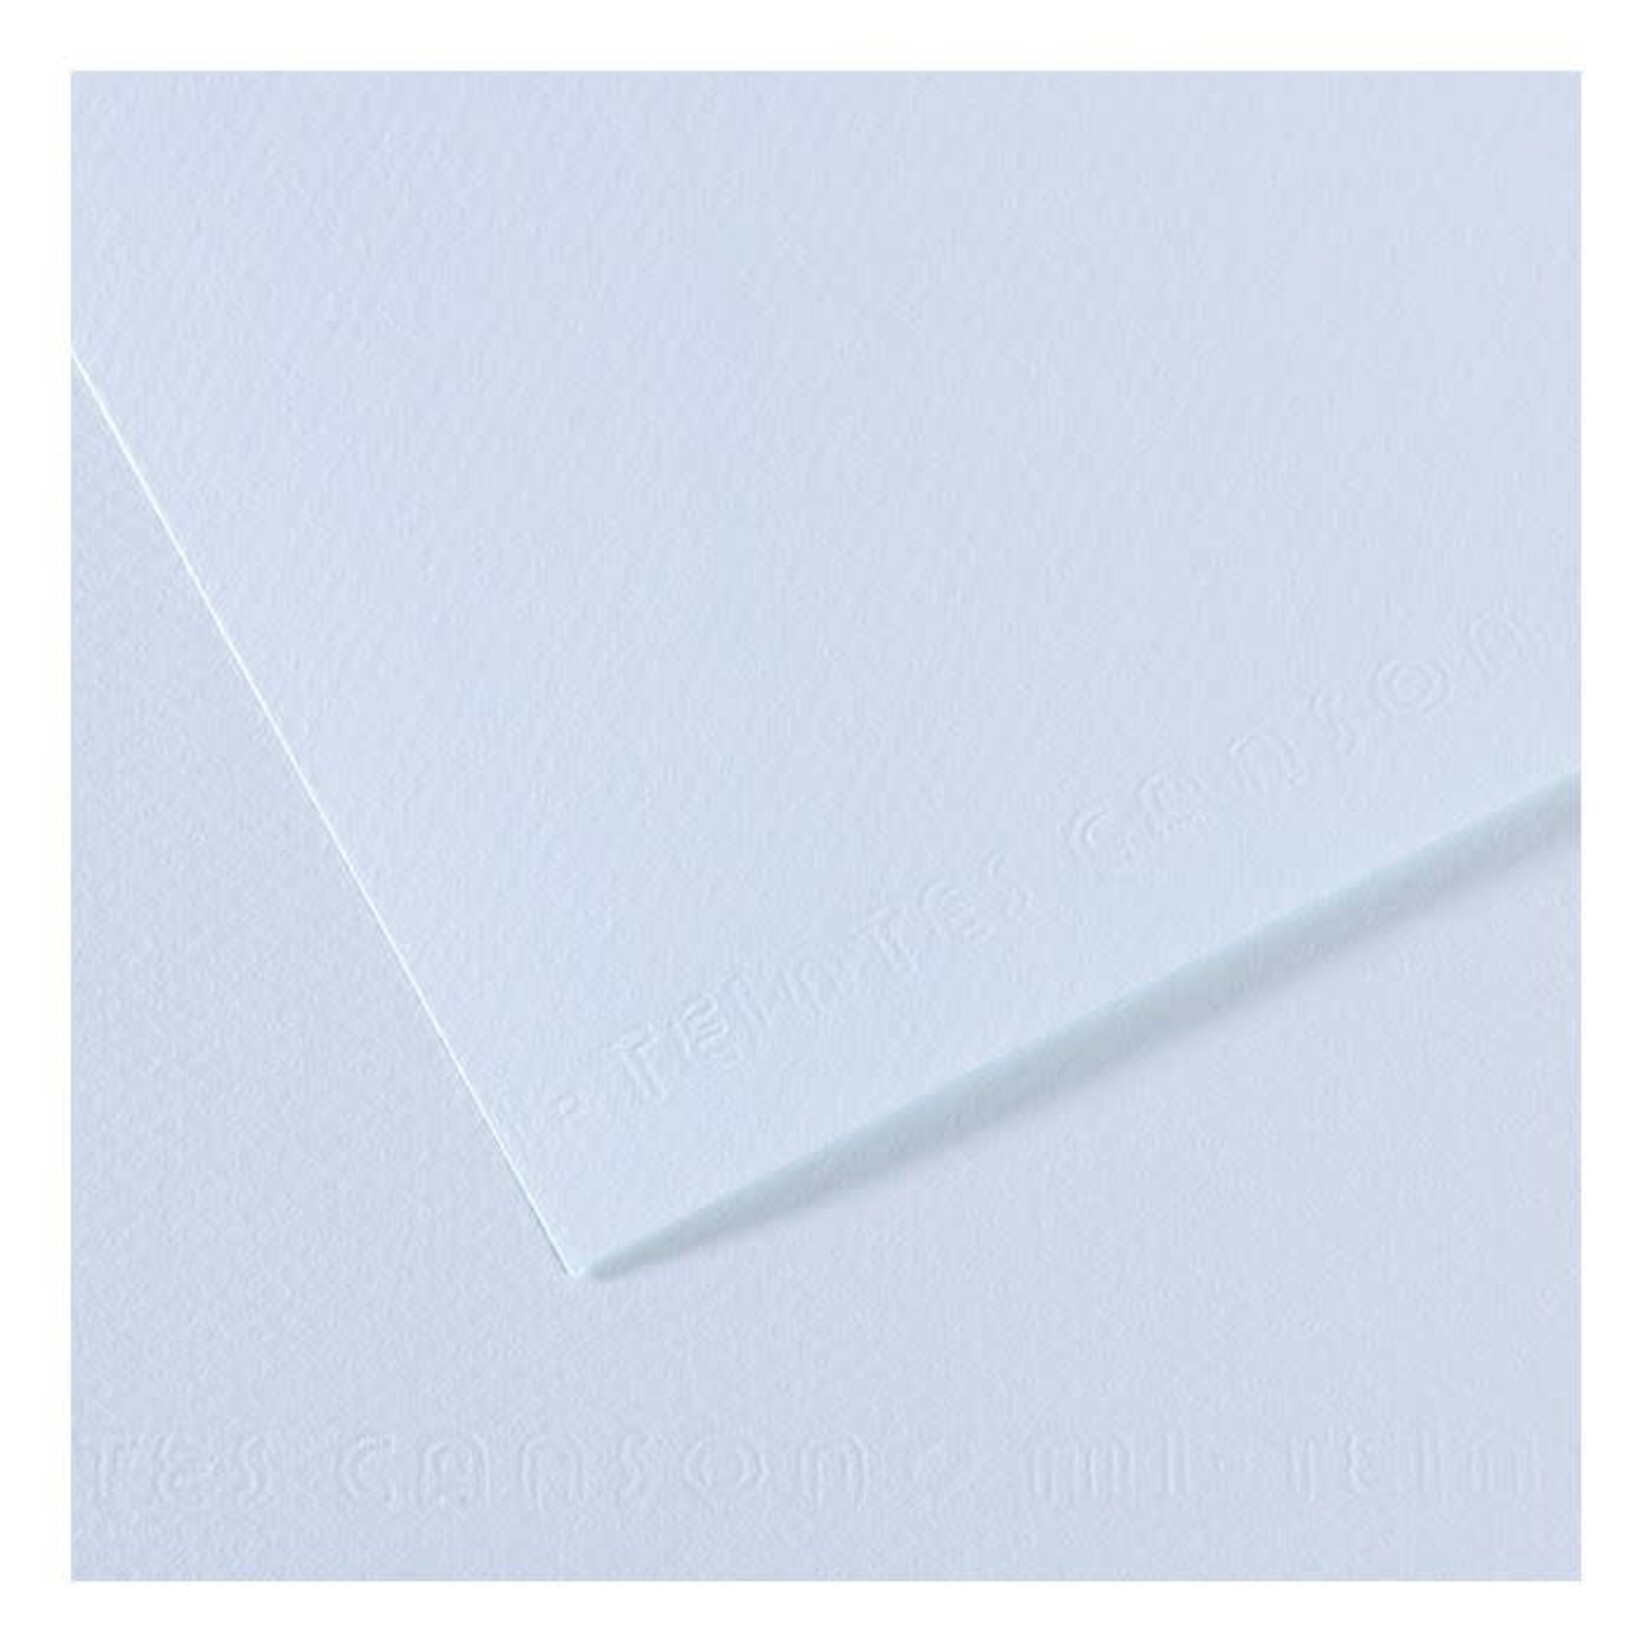 Canson Mi-Teintes Paper Sheets, 8-1/2'' x 11'', Azure